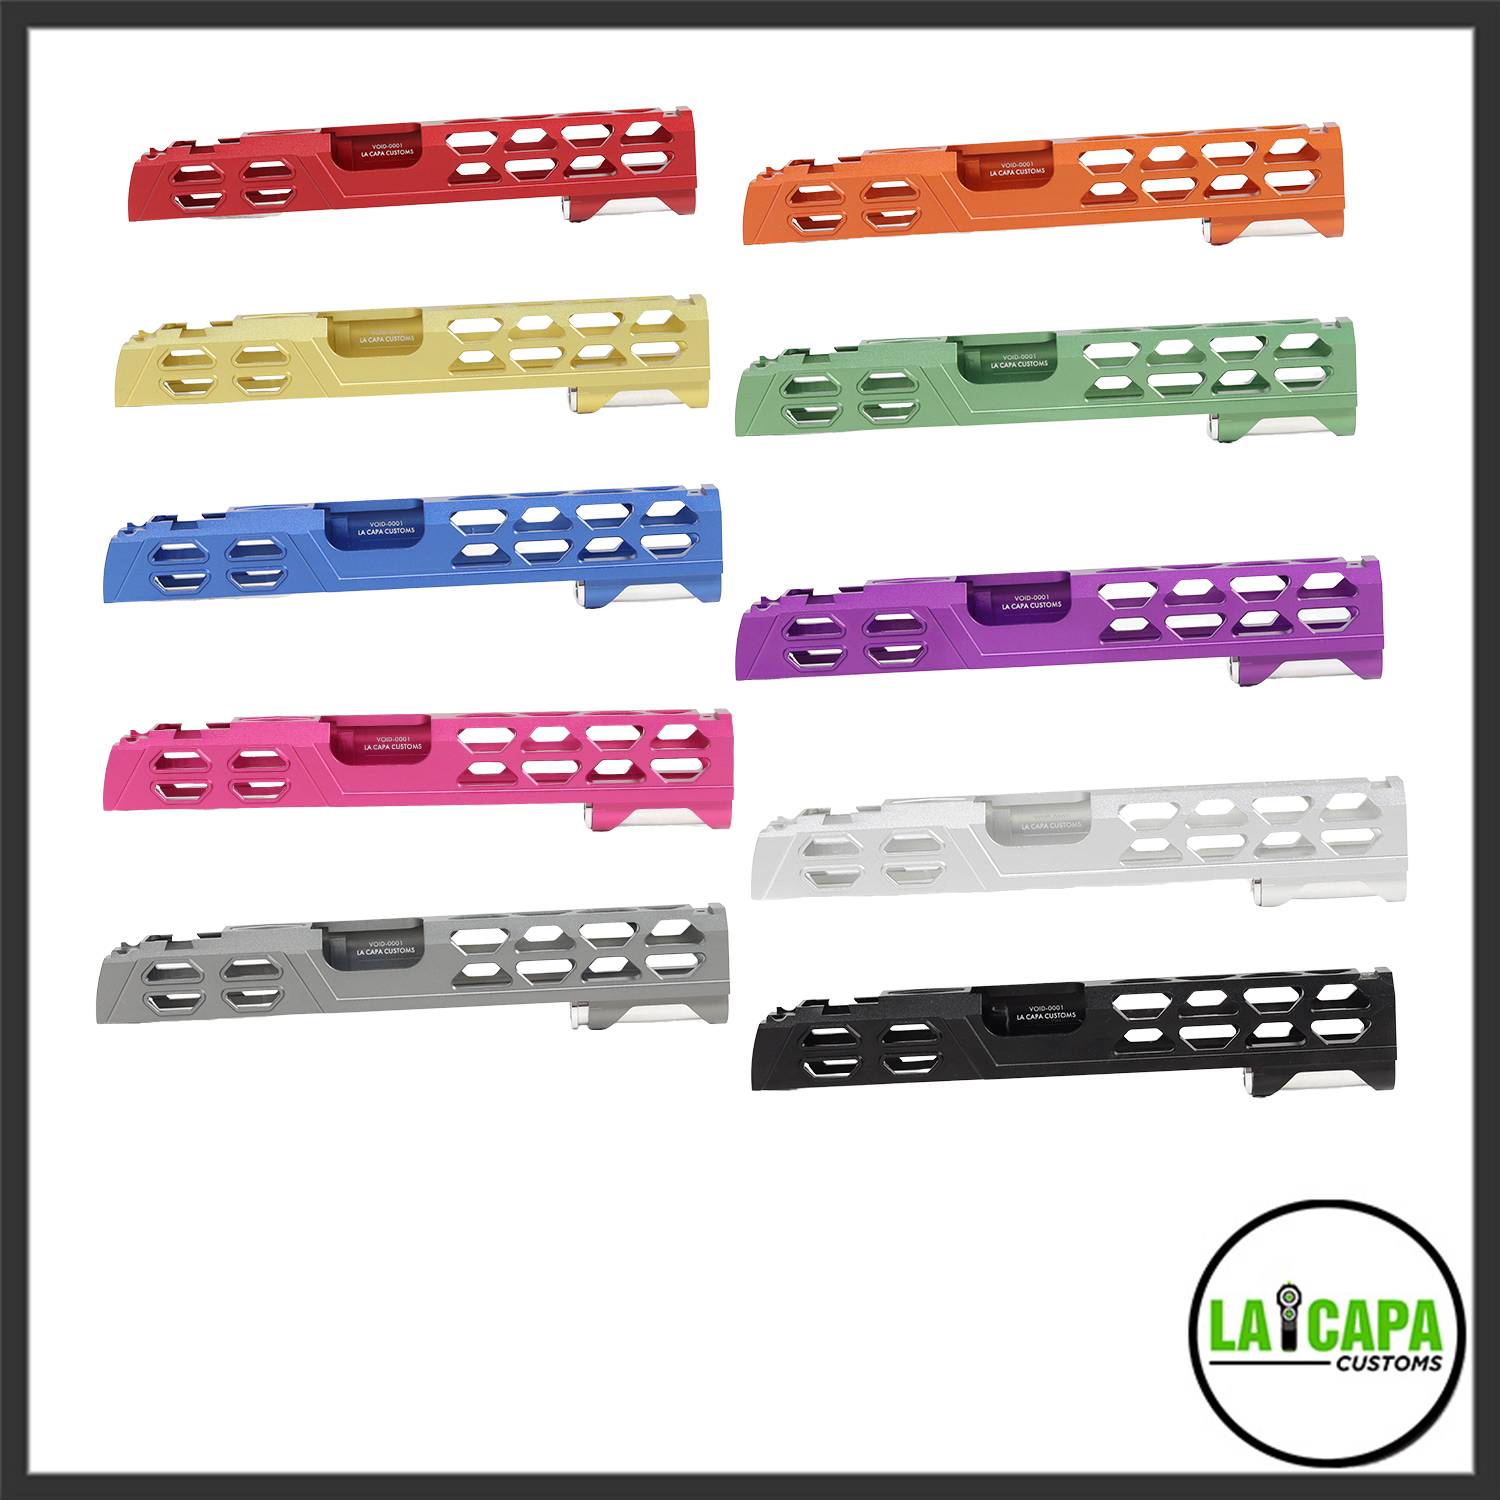 LA Capa Customs 5.1 “VOID” Aluminum Slide

- Grey